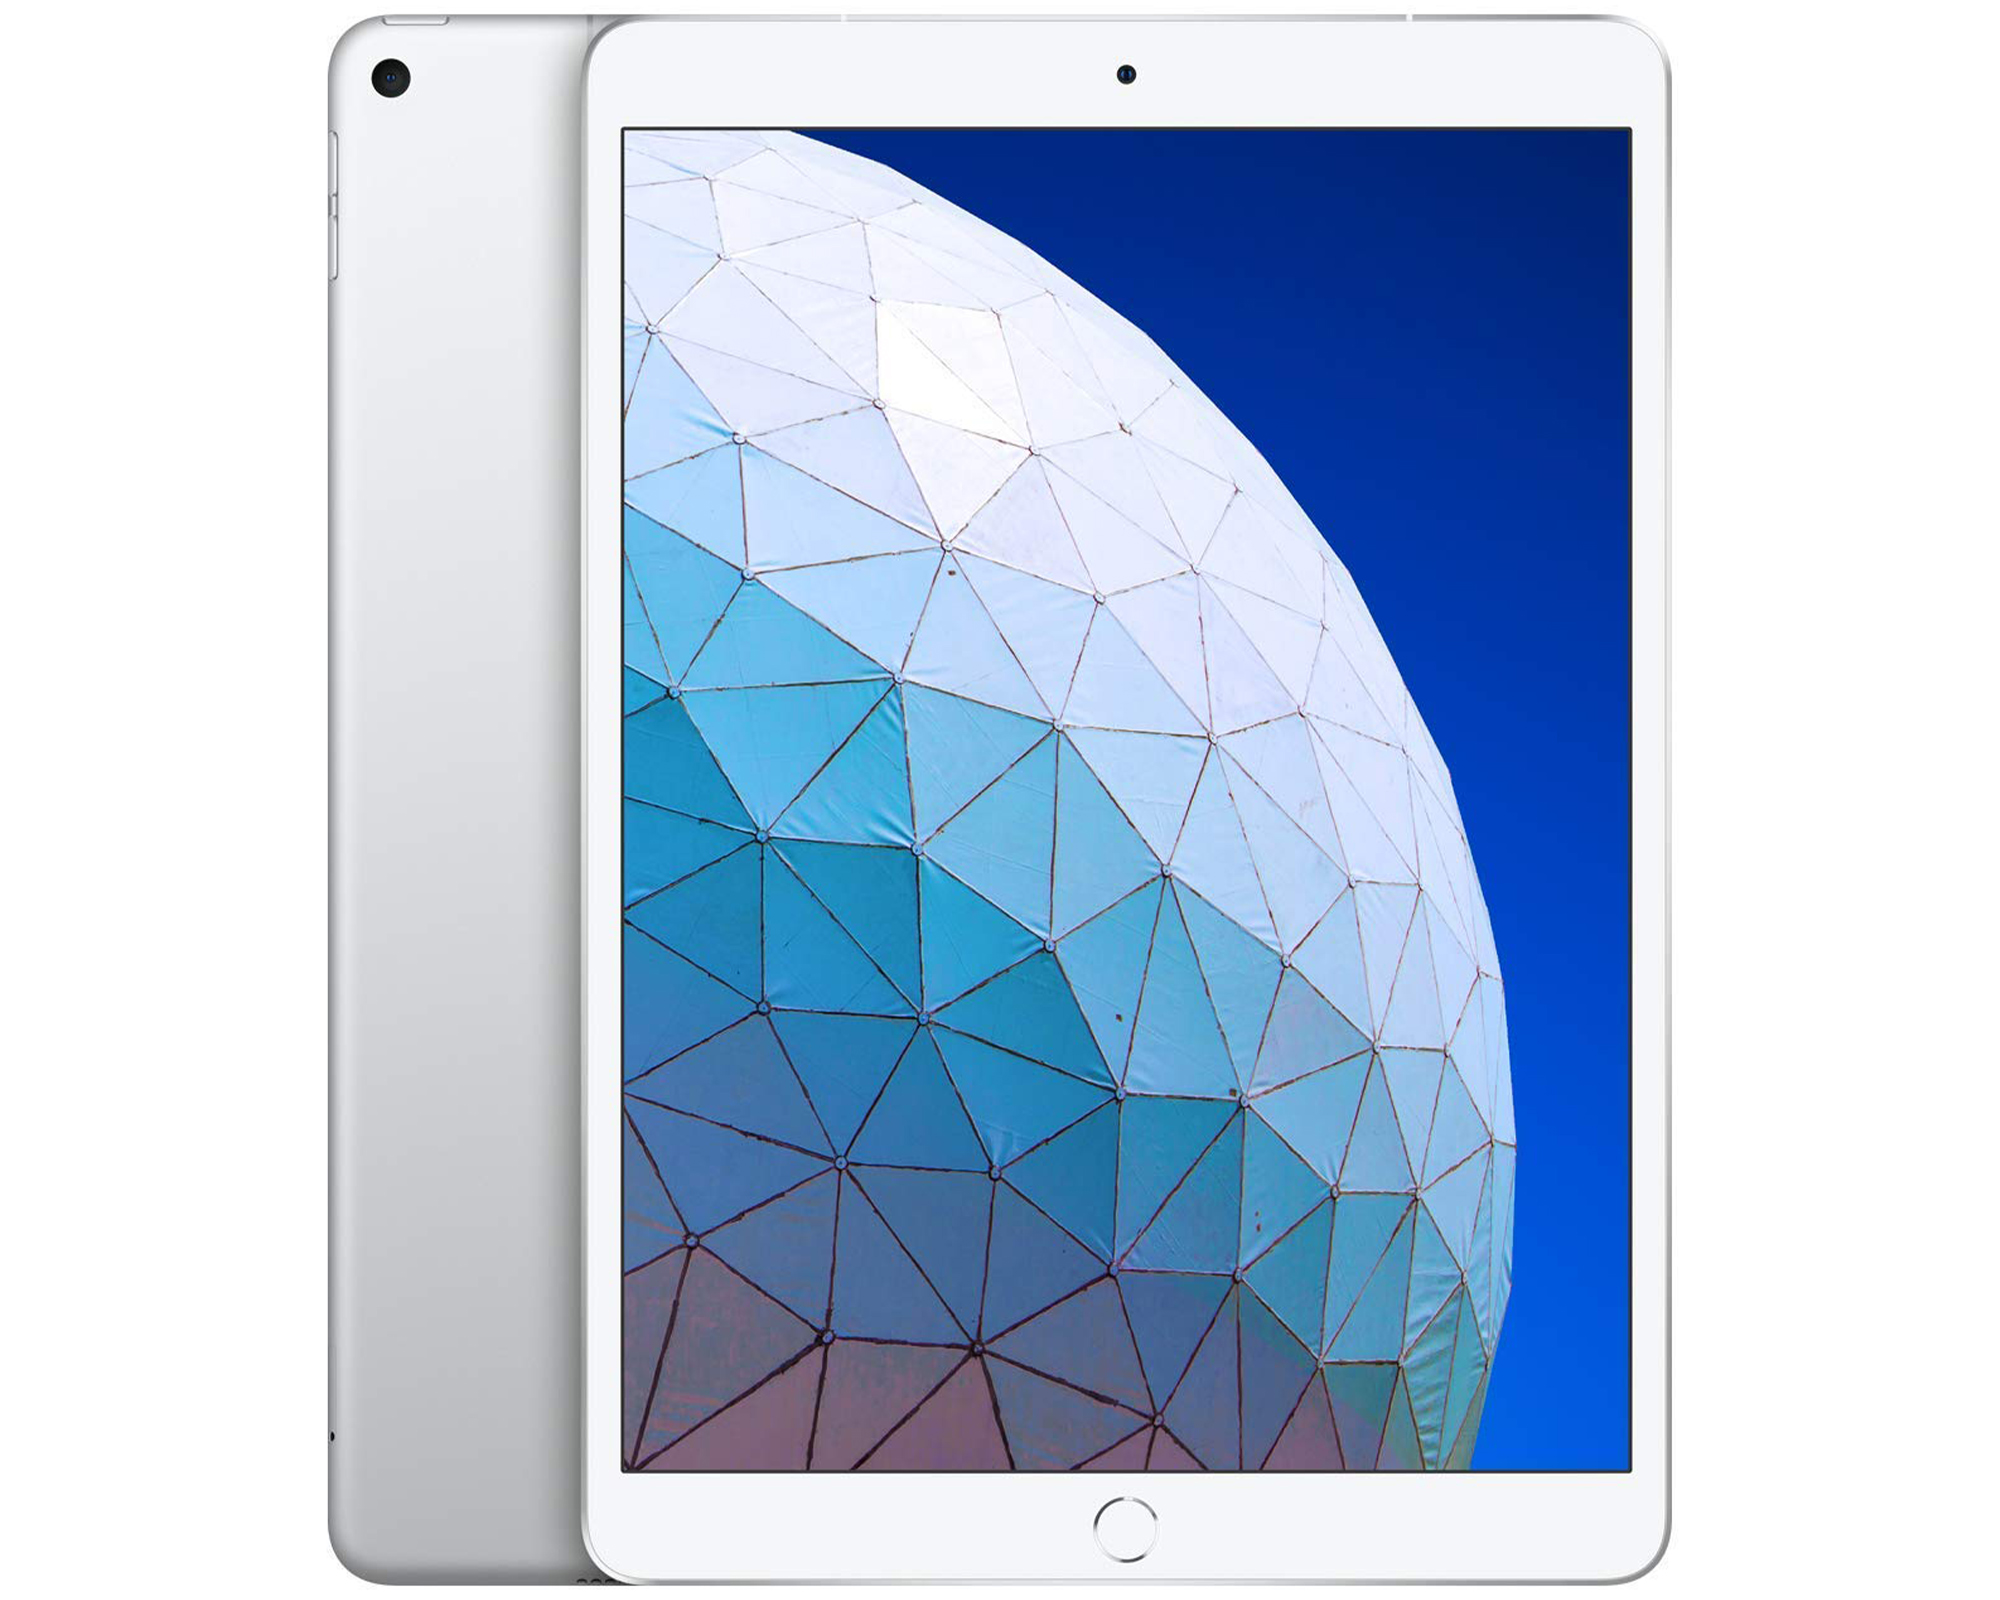 Restored Apple iPad Air 2 16GB Wi-Fi (Refurbished) - image 3 of 6